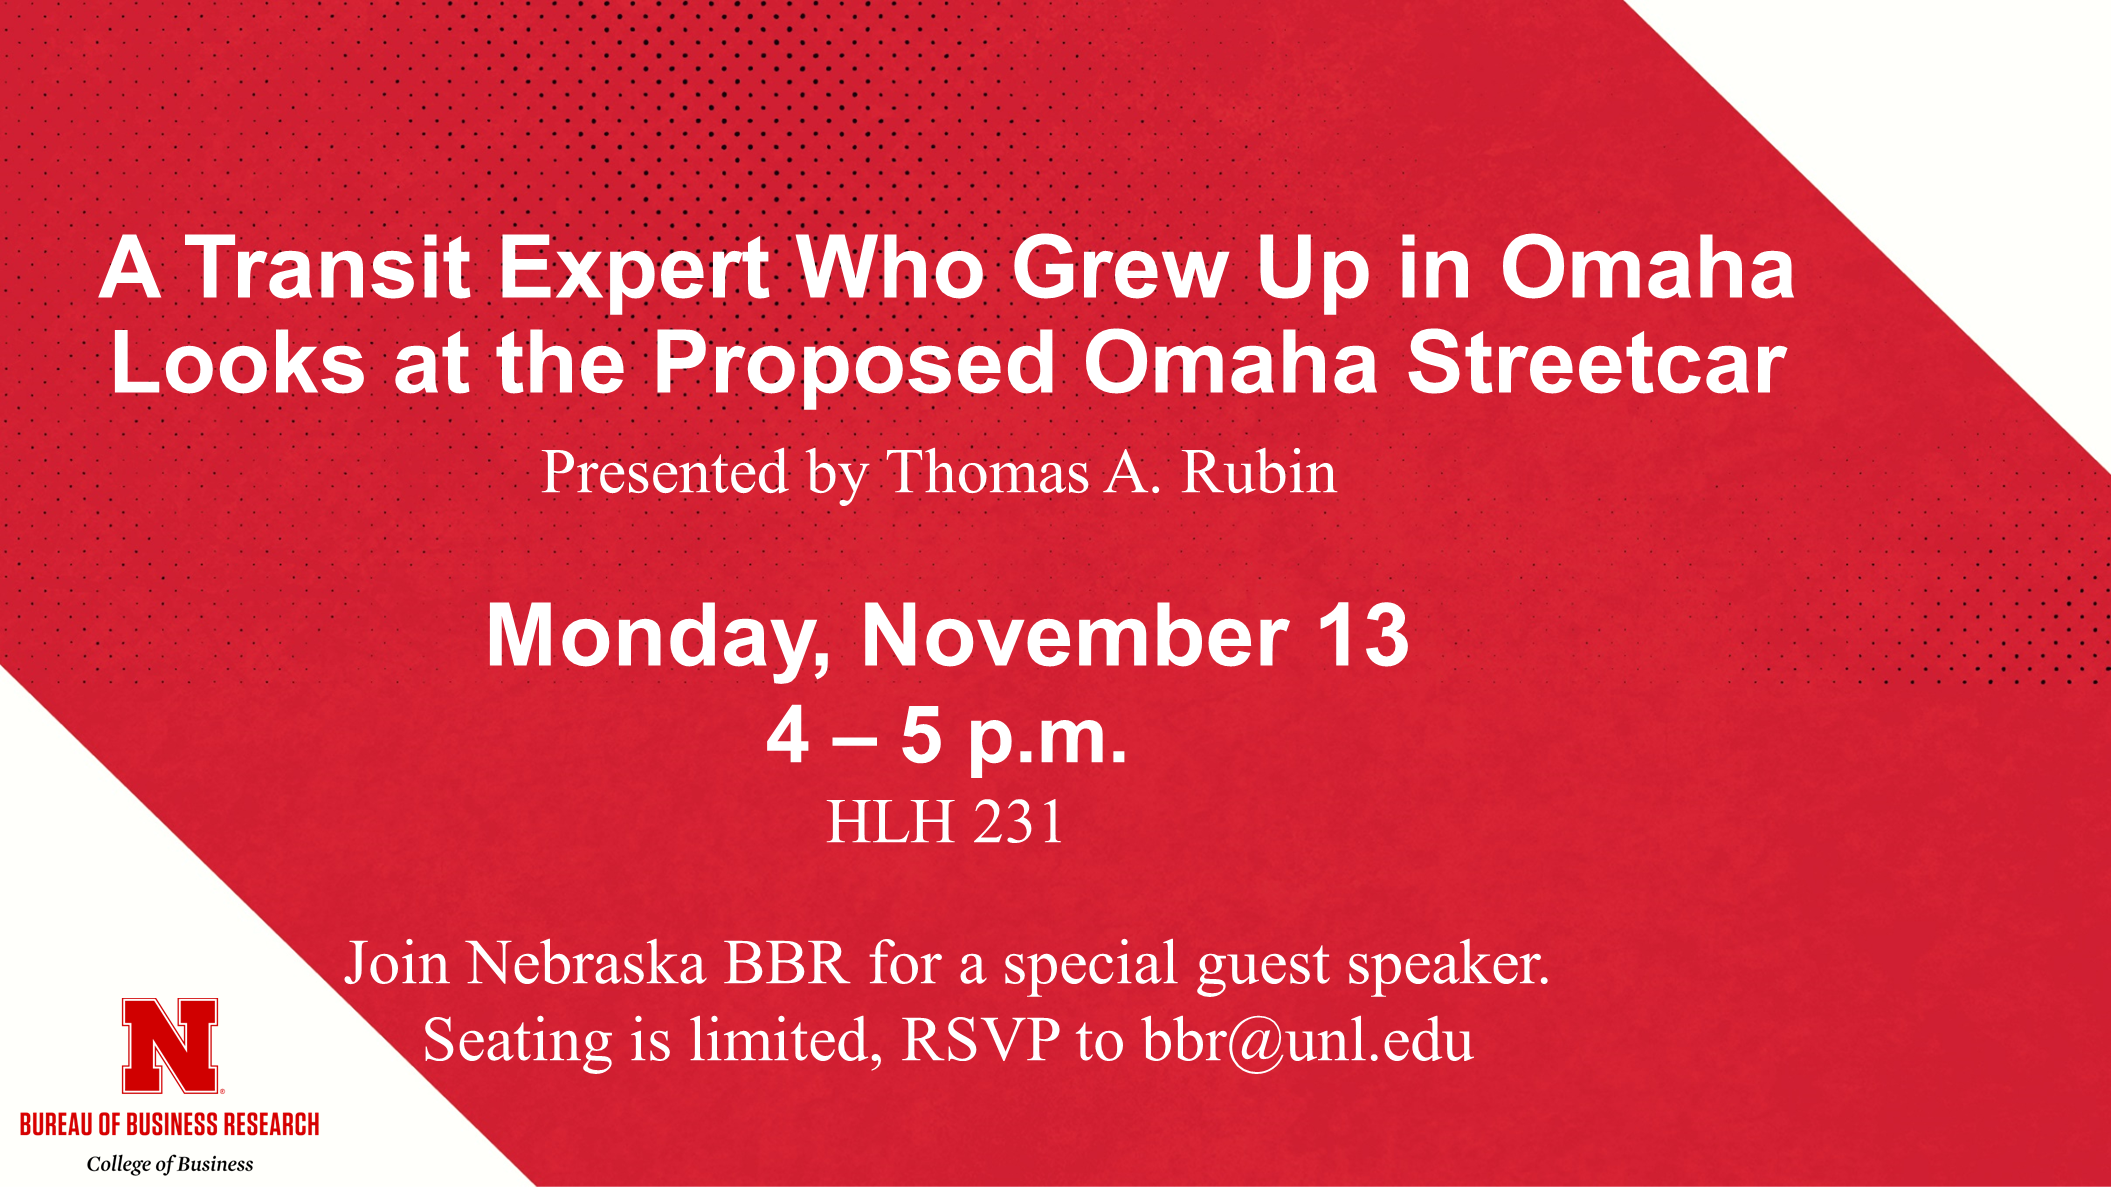 Nebraska Bureau of Business Research Hosts Guest Speaker Thomas A. Rubin